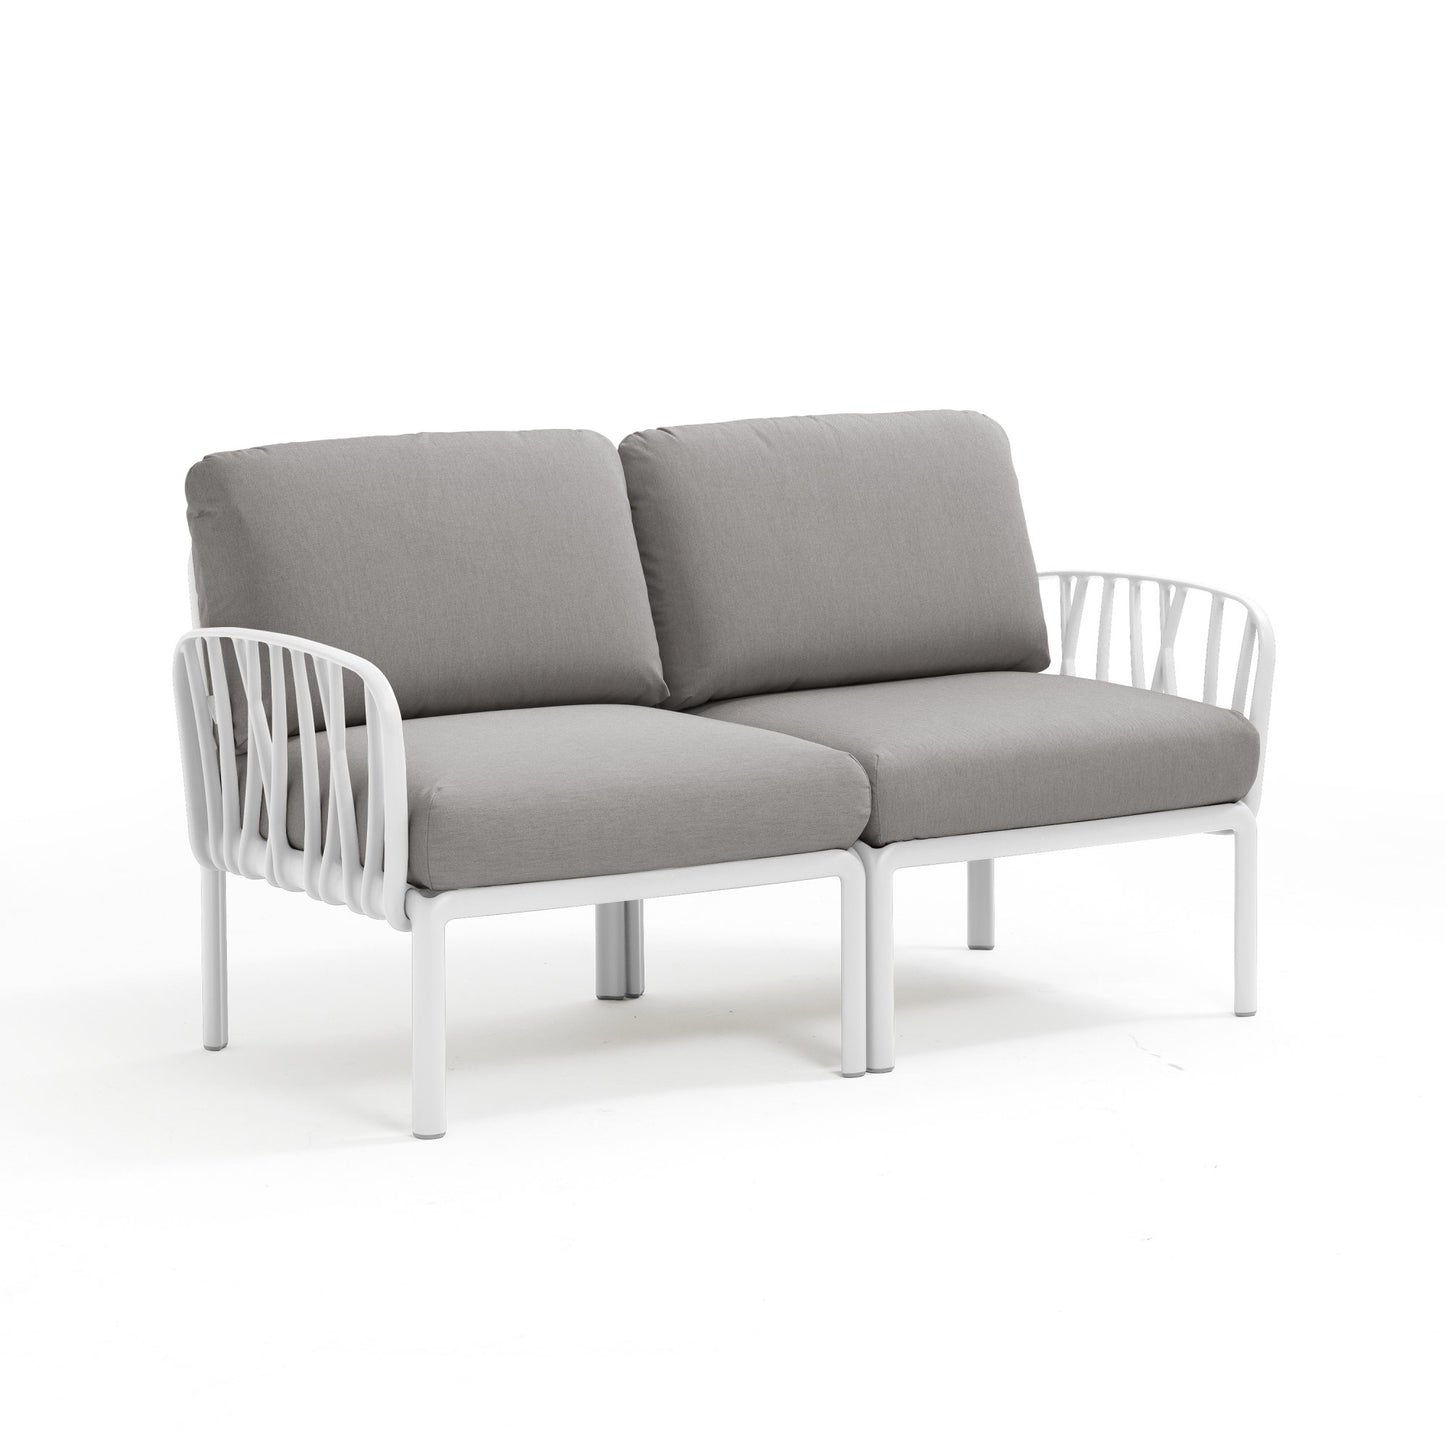 Komodo outdoor sofa white frame grey cushions